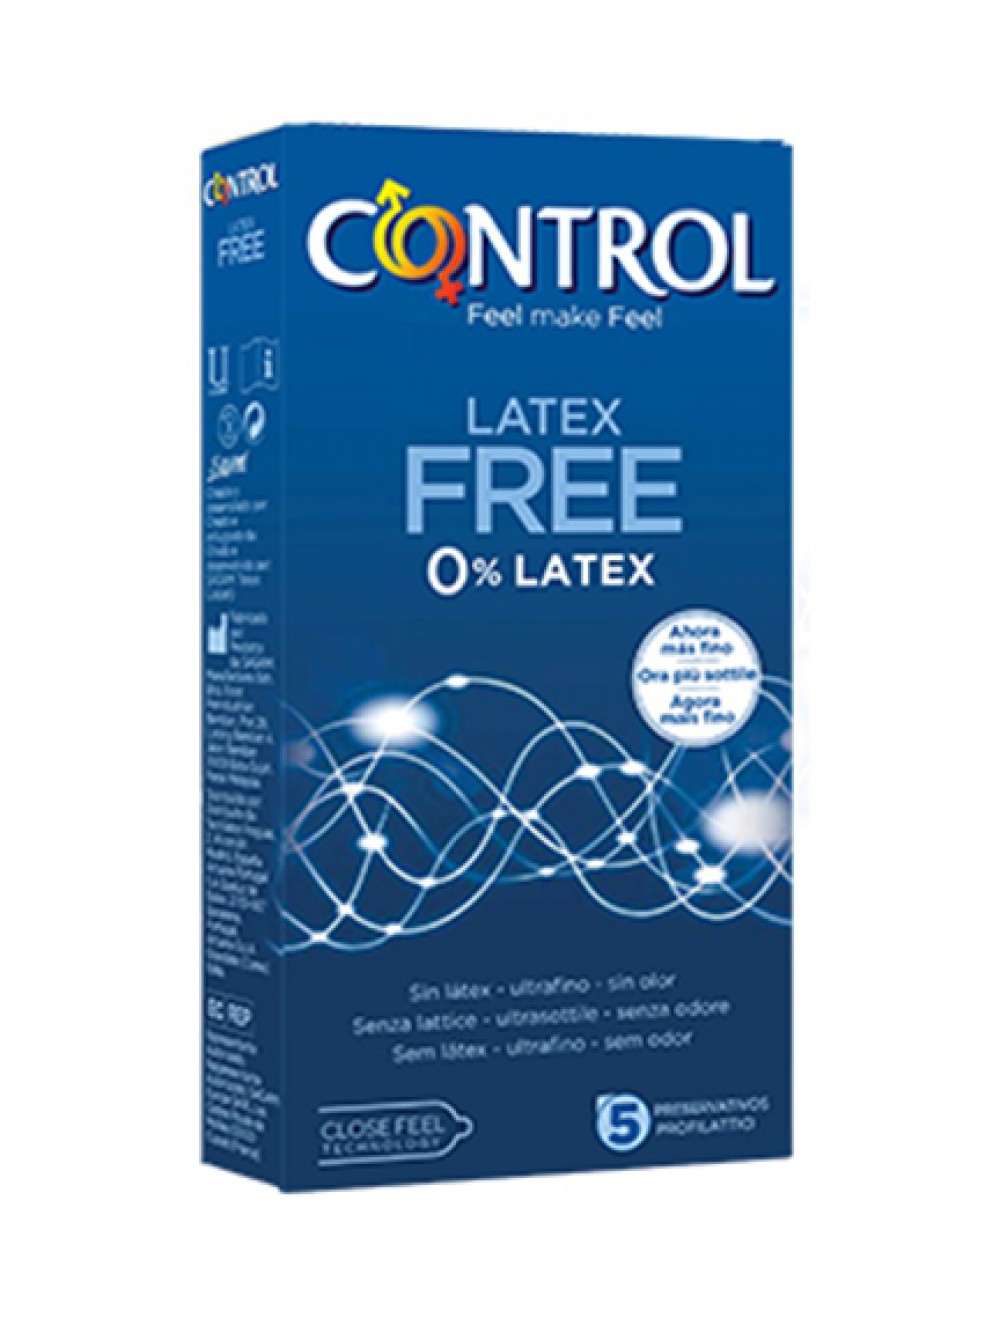 Control Latex Free 5 preservativi 8411134129857